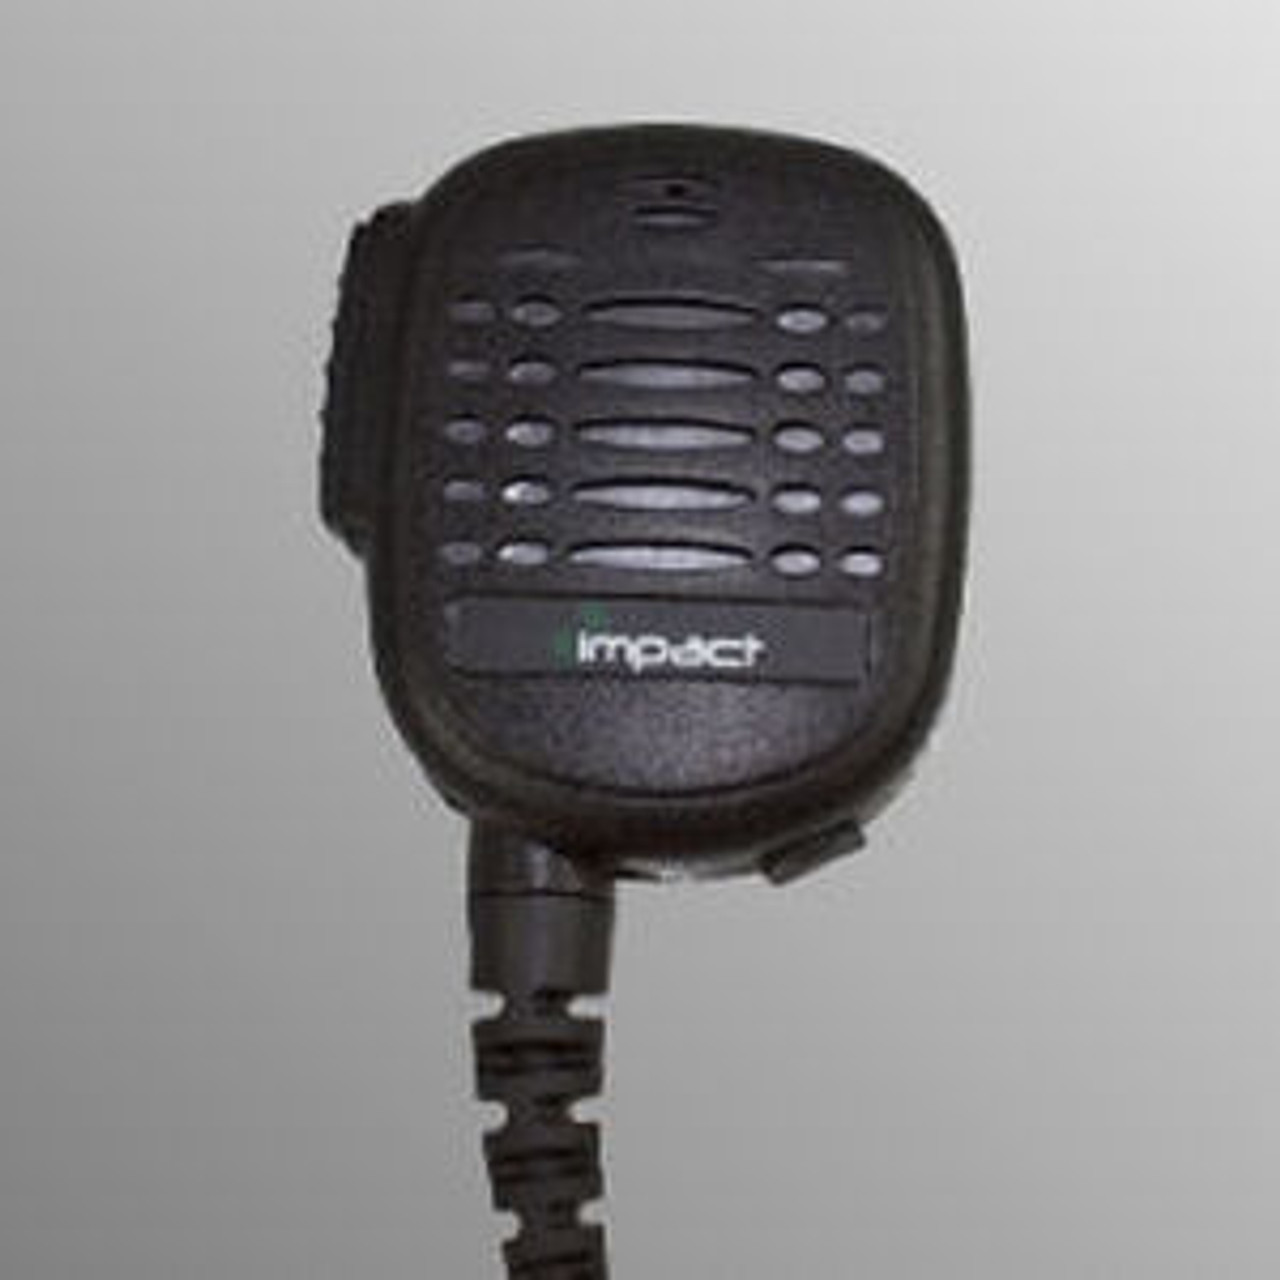 Kenwood TK-2170 Noise Canceling Speaker Mic.